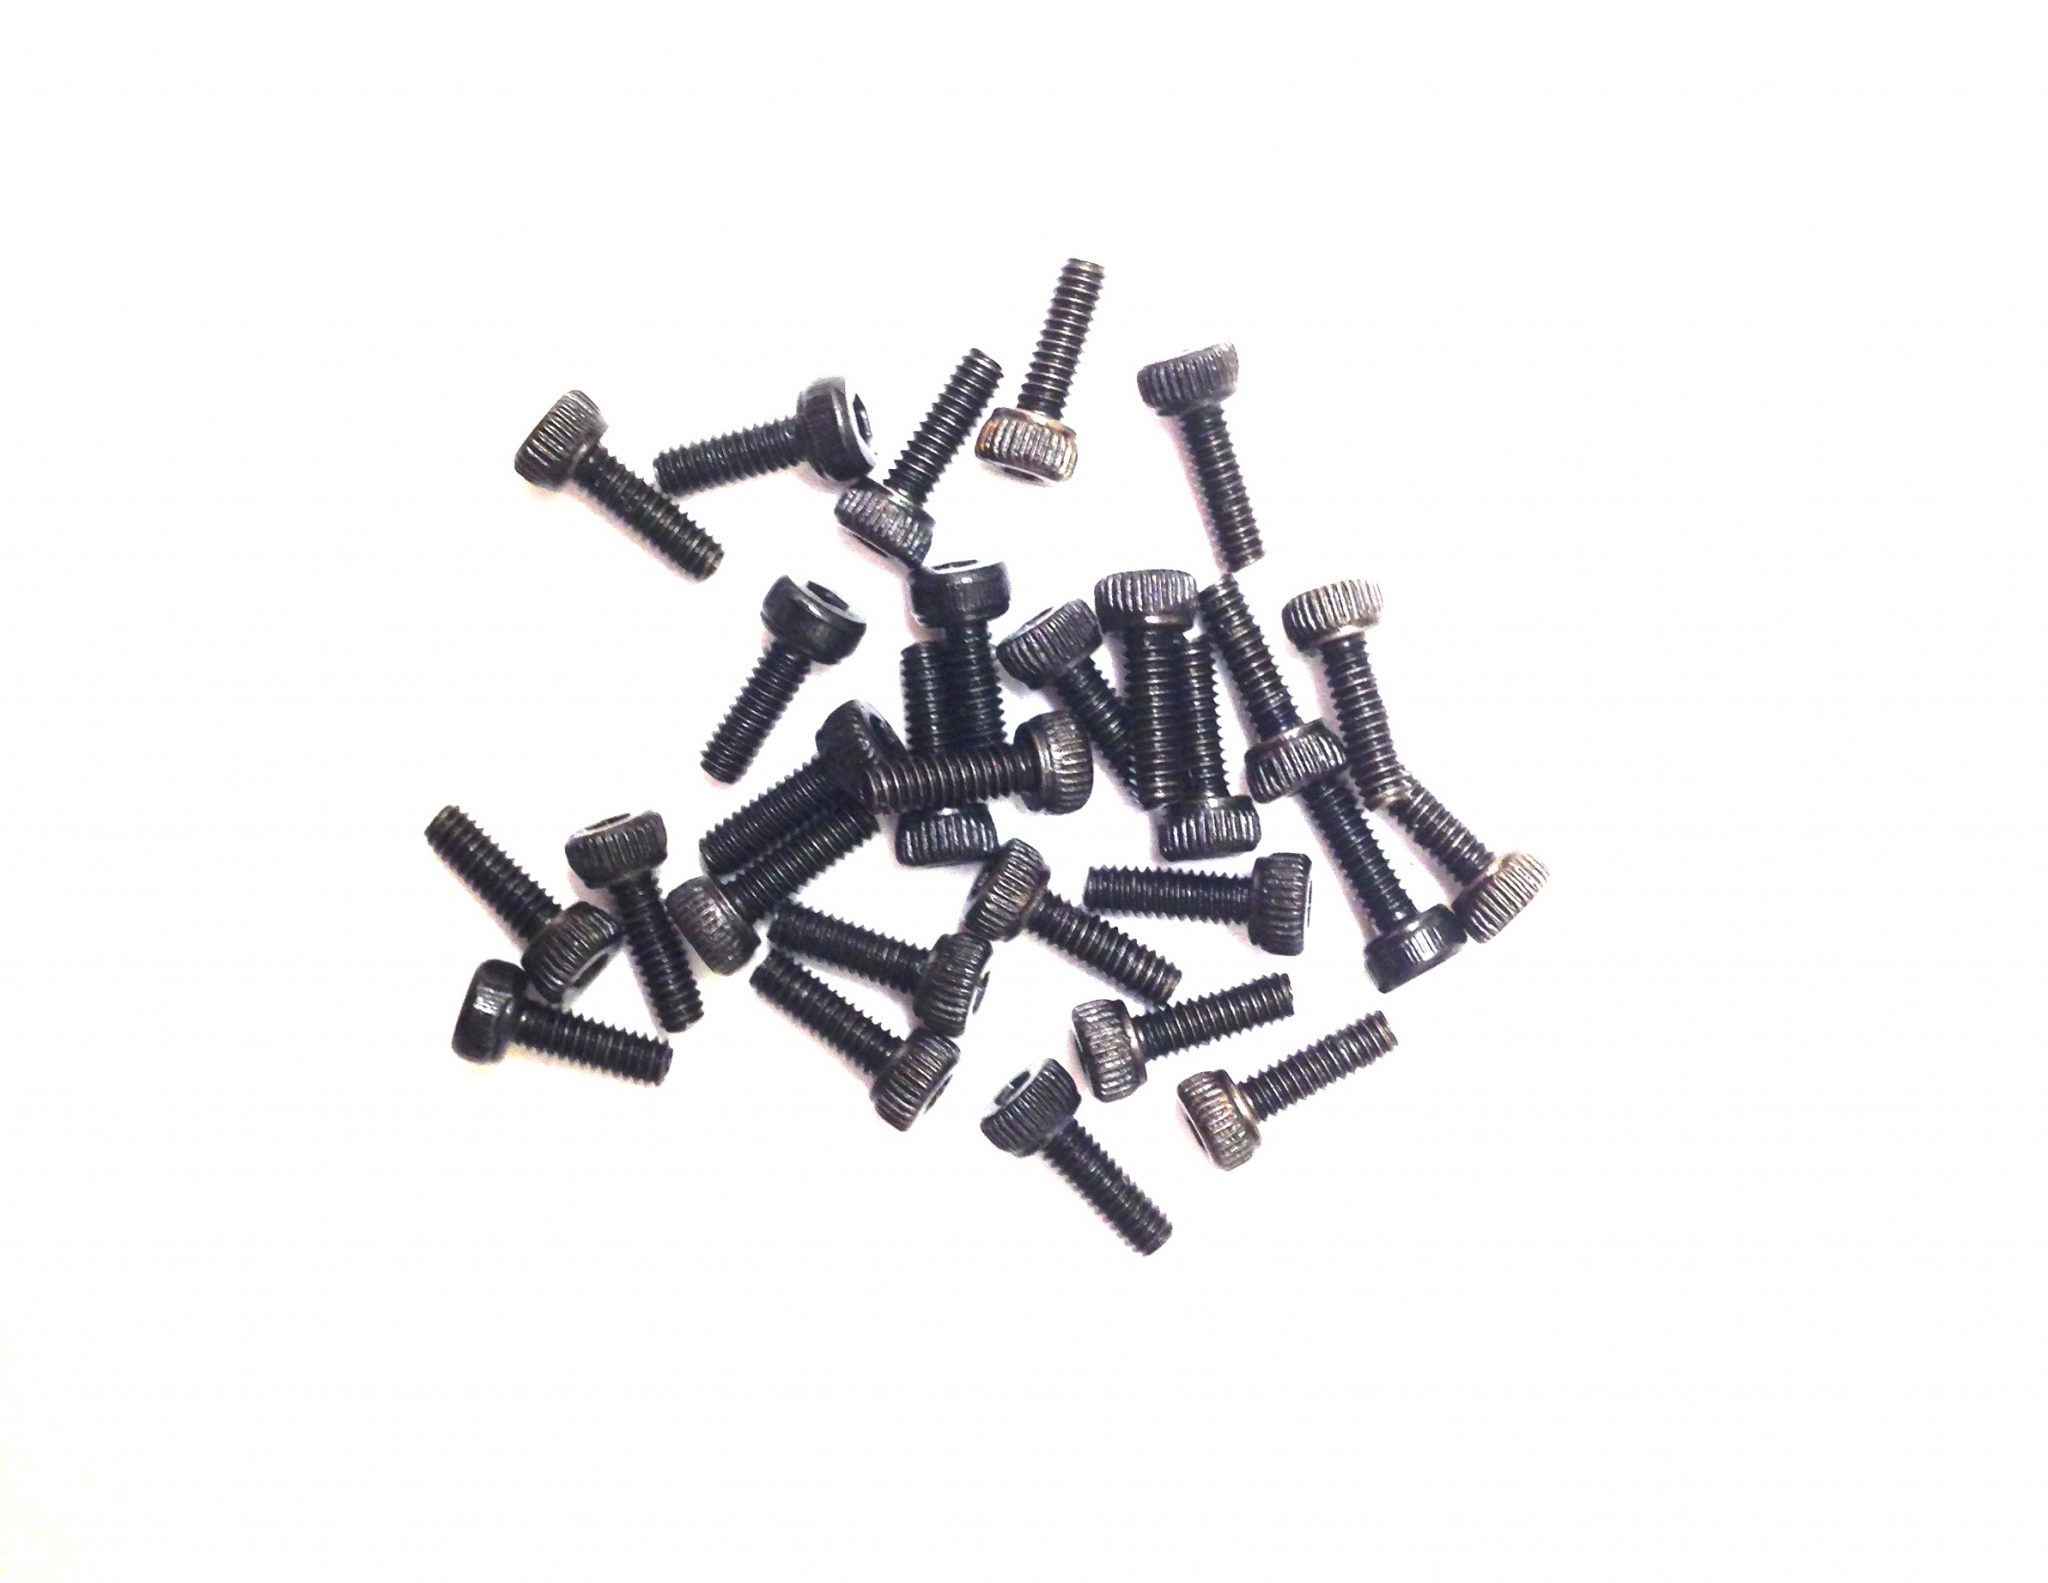 10pcs of 6mm M2 Black Screws